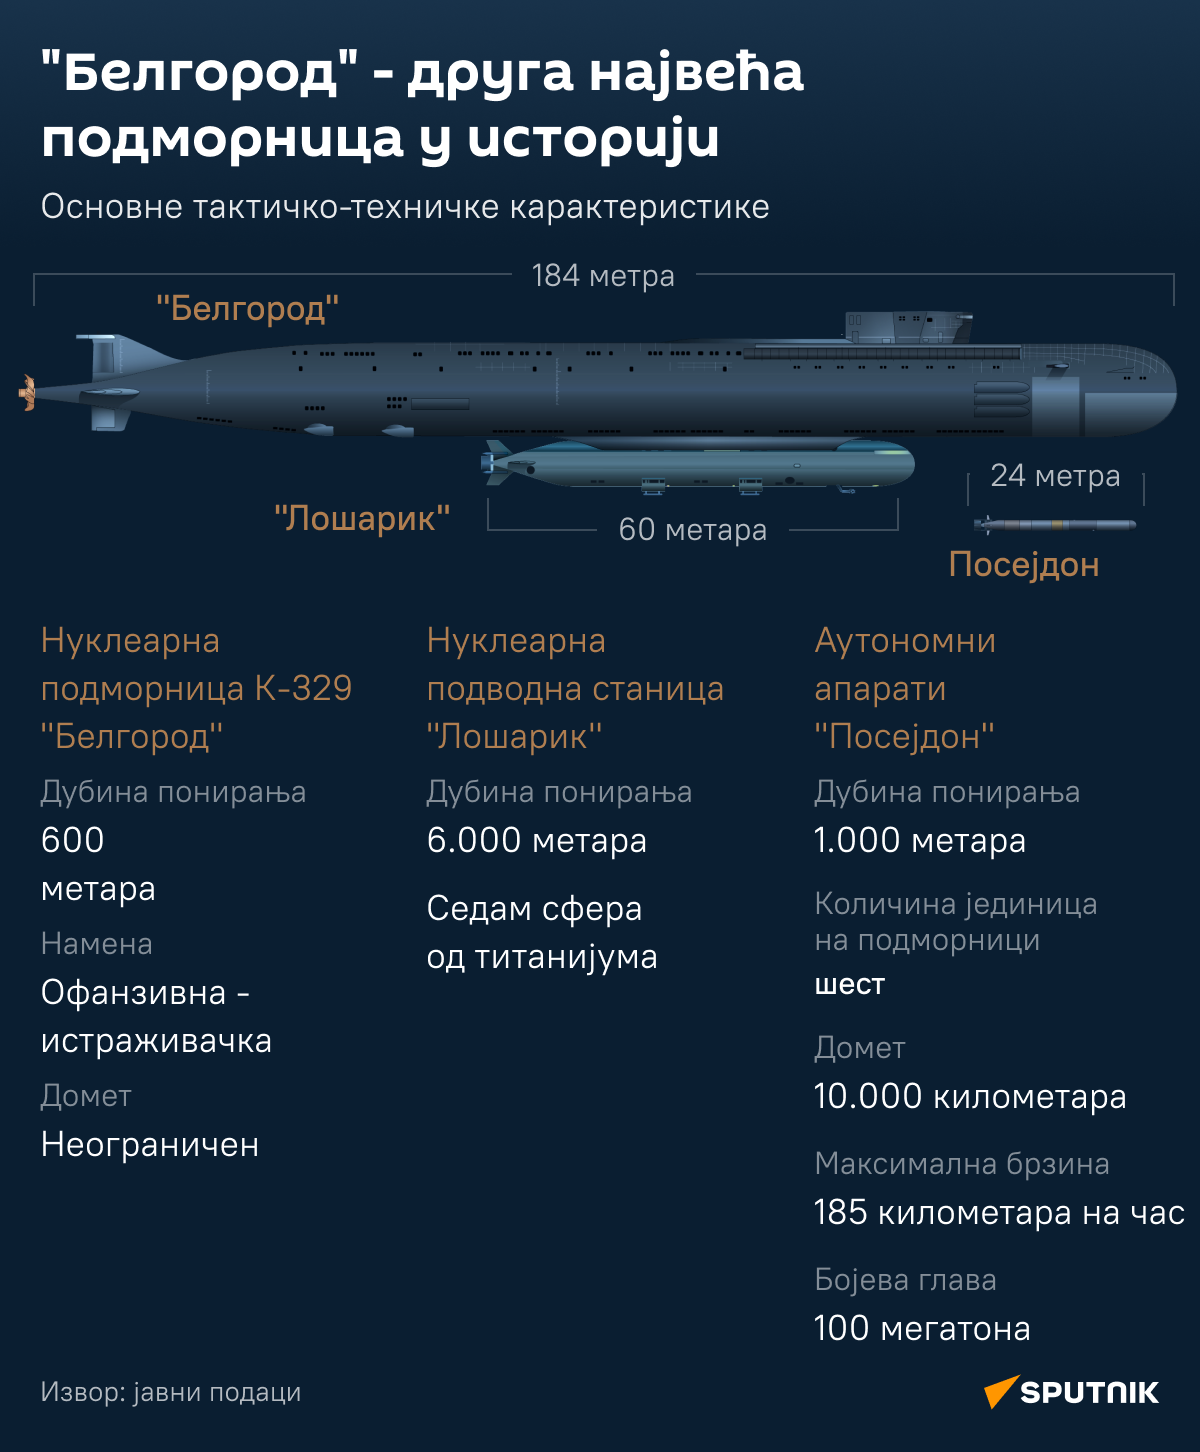  Инфографика подморница Белгород   ЋИРИЛИЦА деск - Sputnik Србија